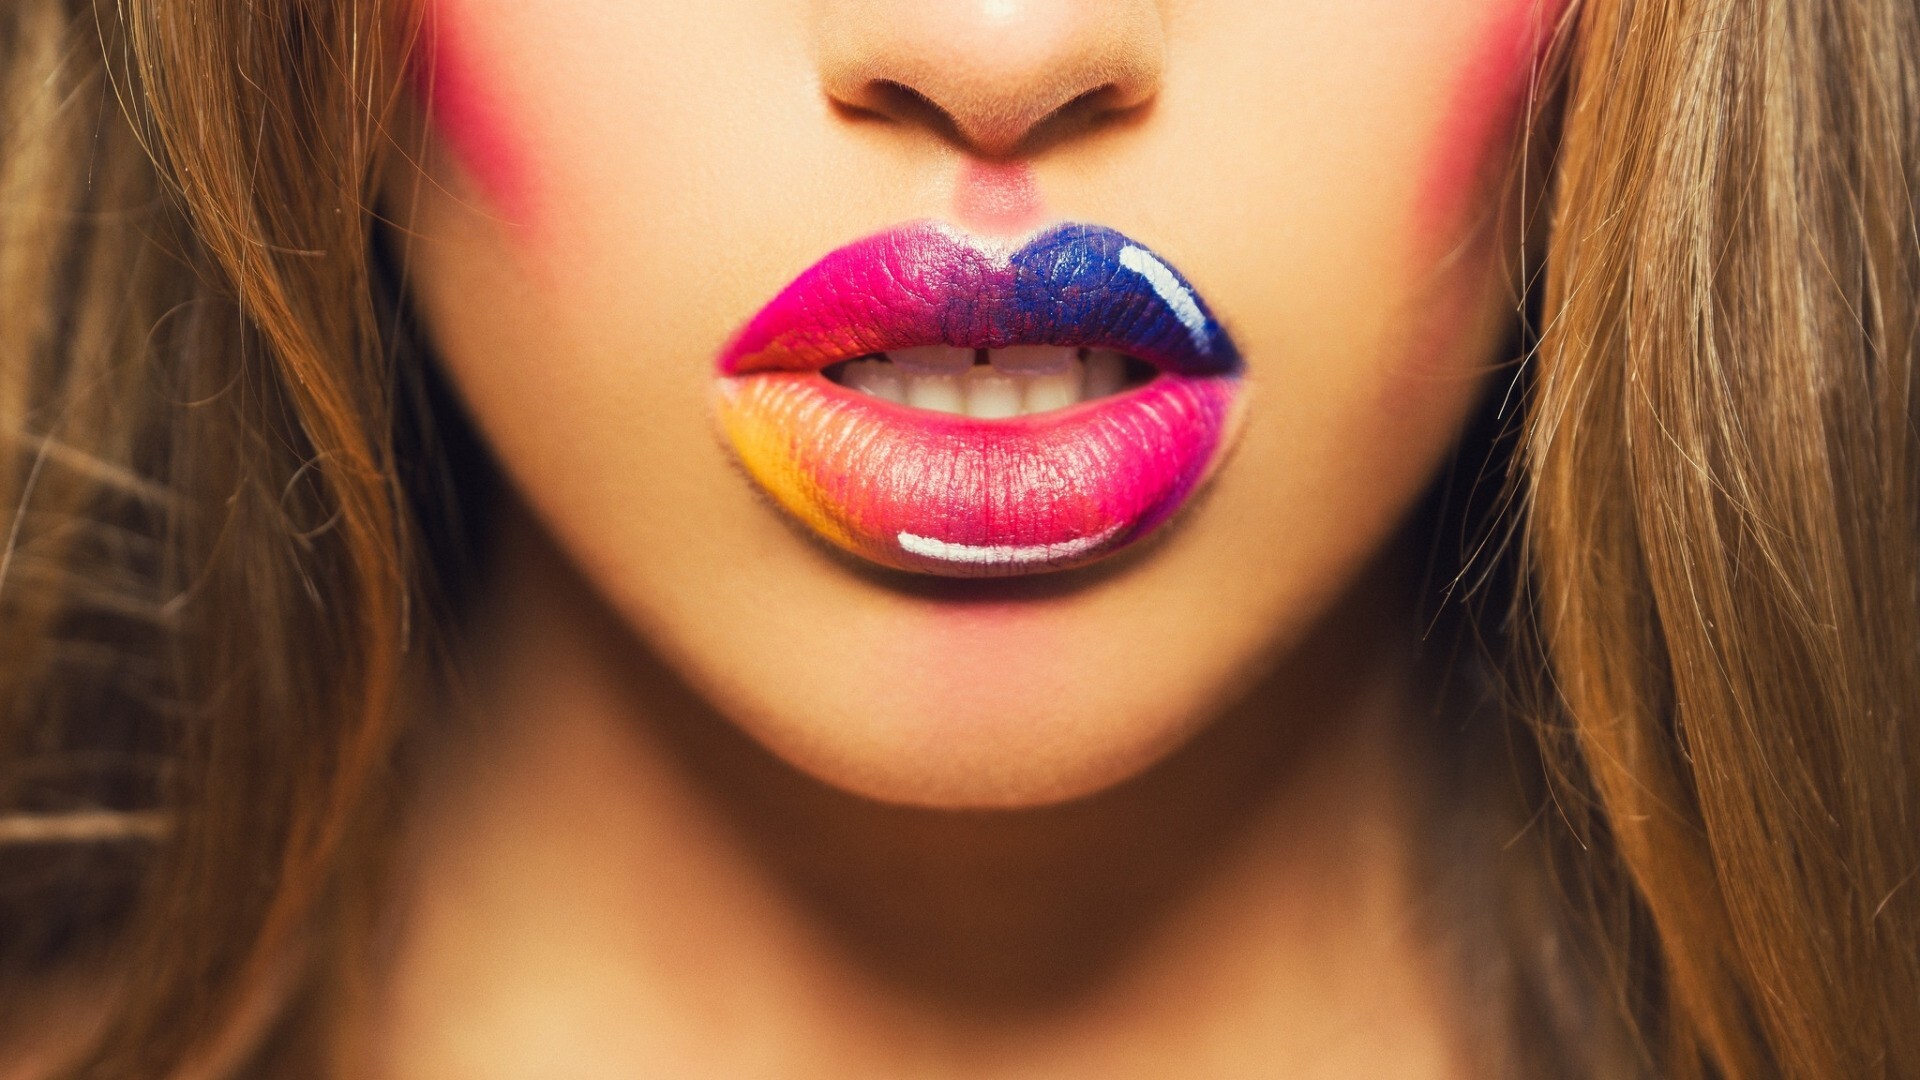 Lipstick: Gradient lips, A type of ombre lipstick style, Multicolored lip makeup. 1920x1080 Full HD Wallpaper.